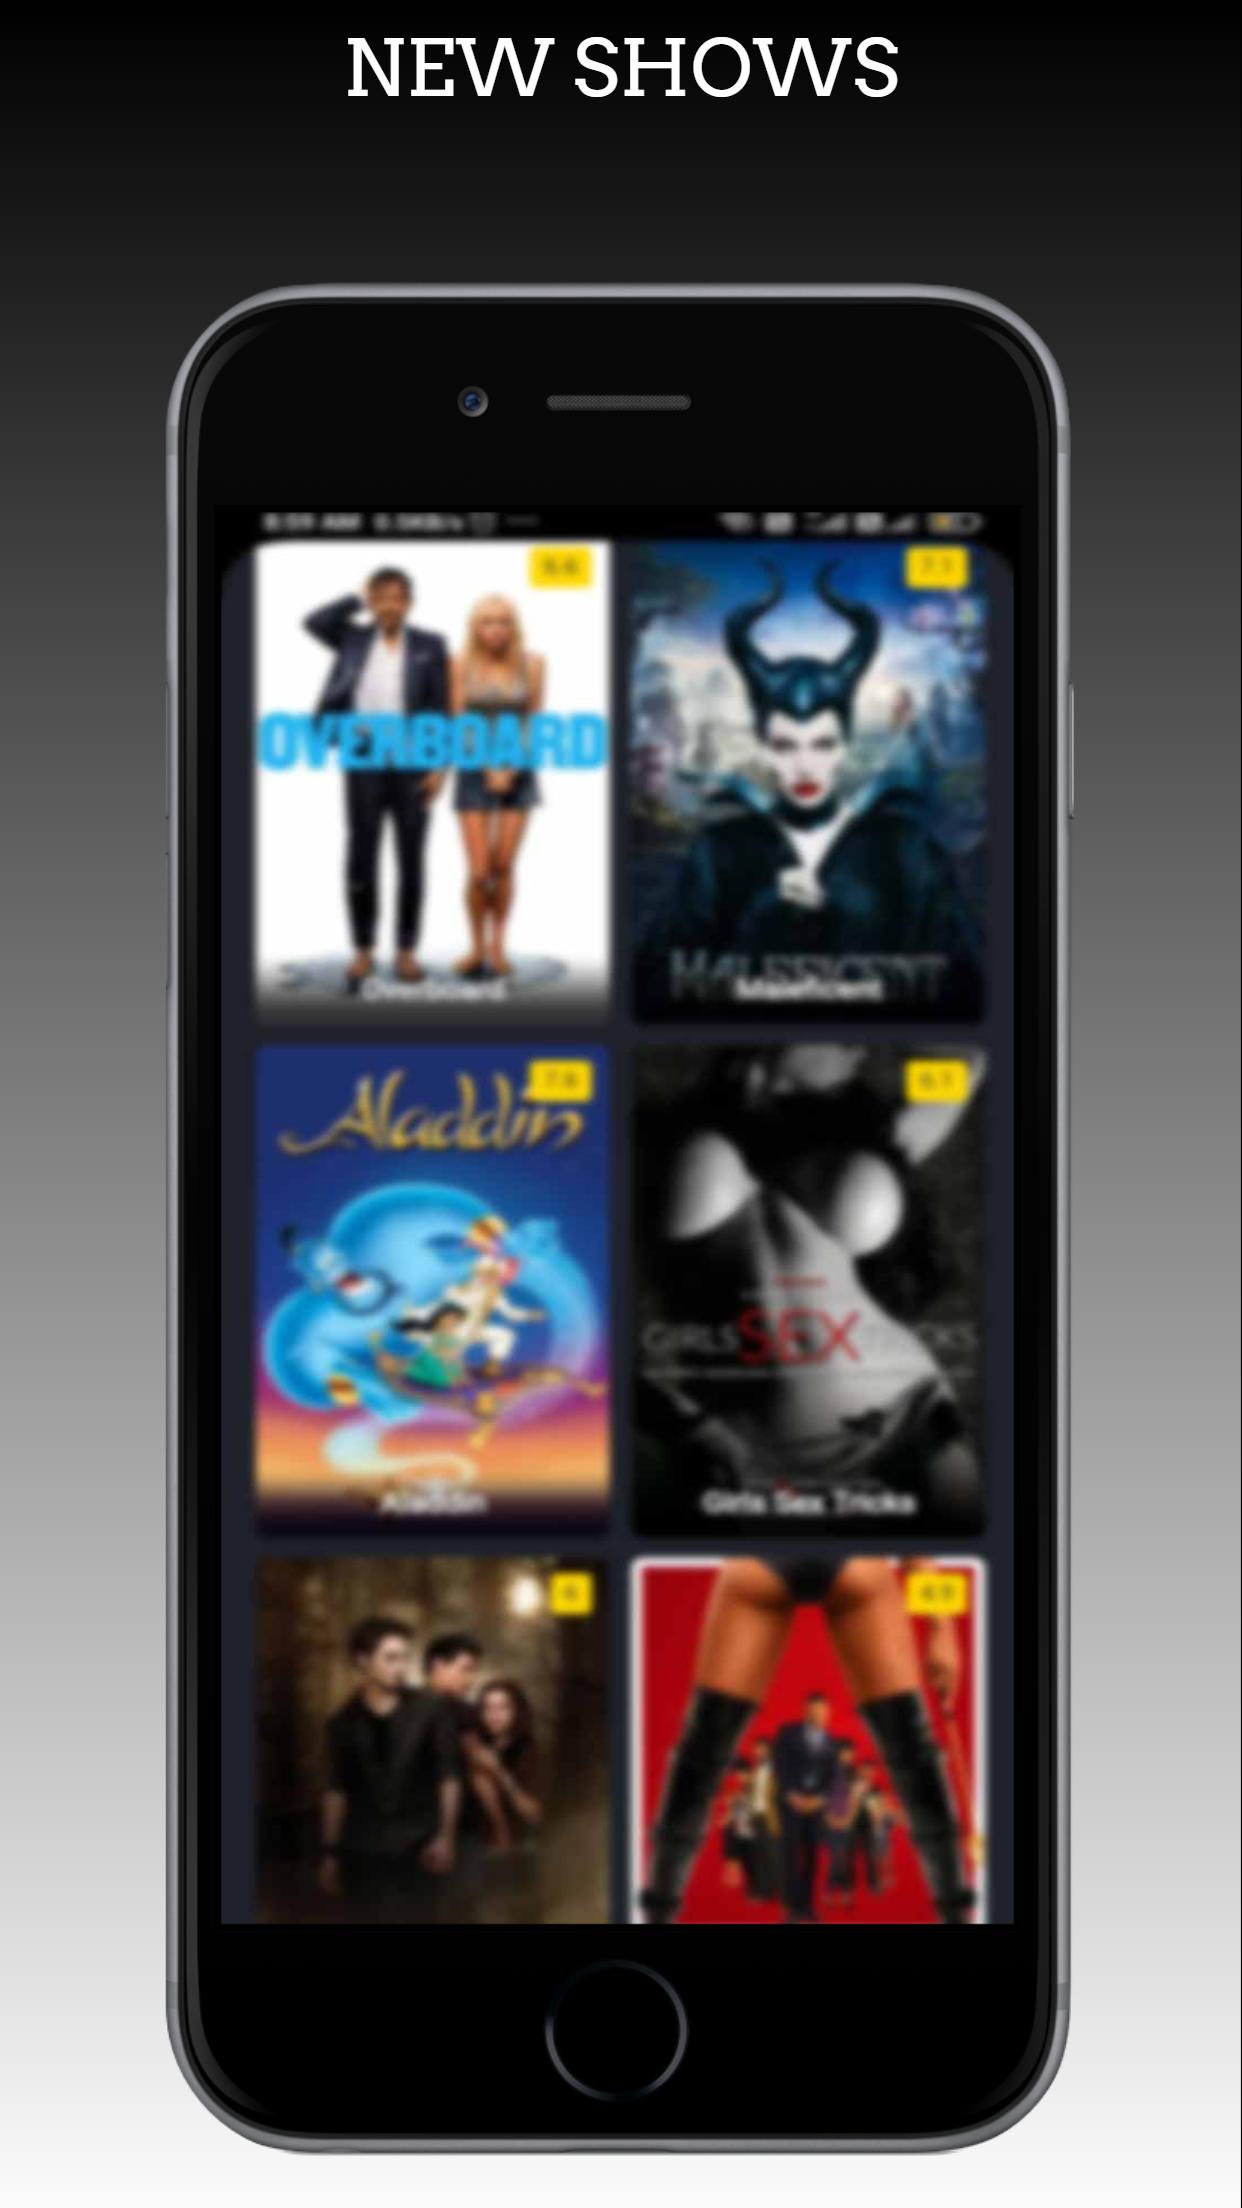 Mediabox hd free movies